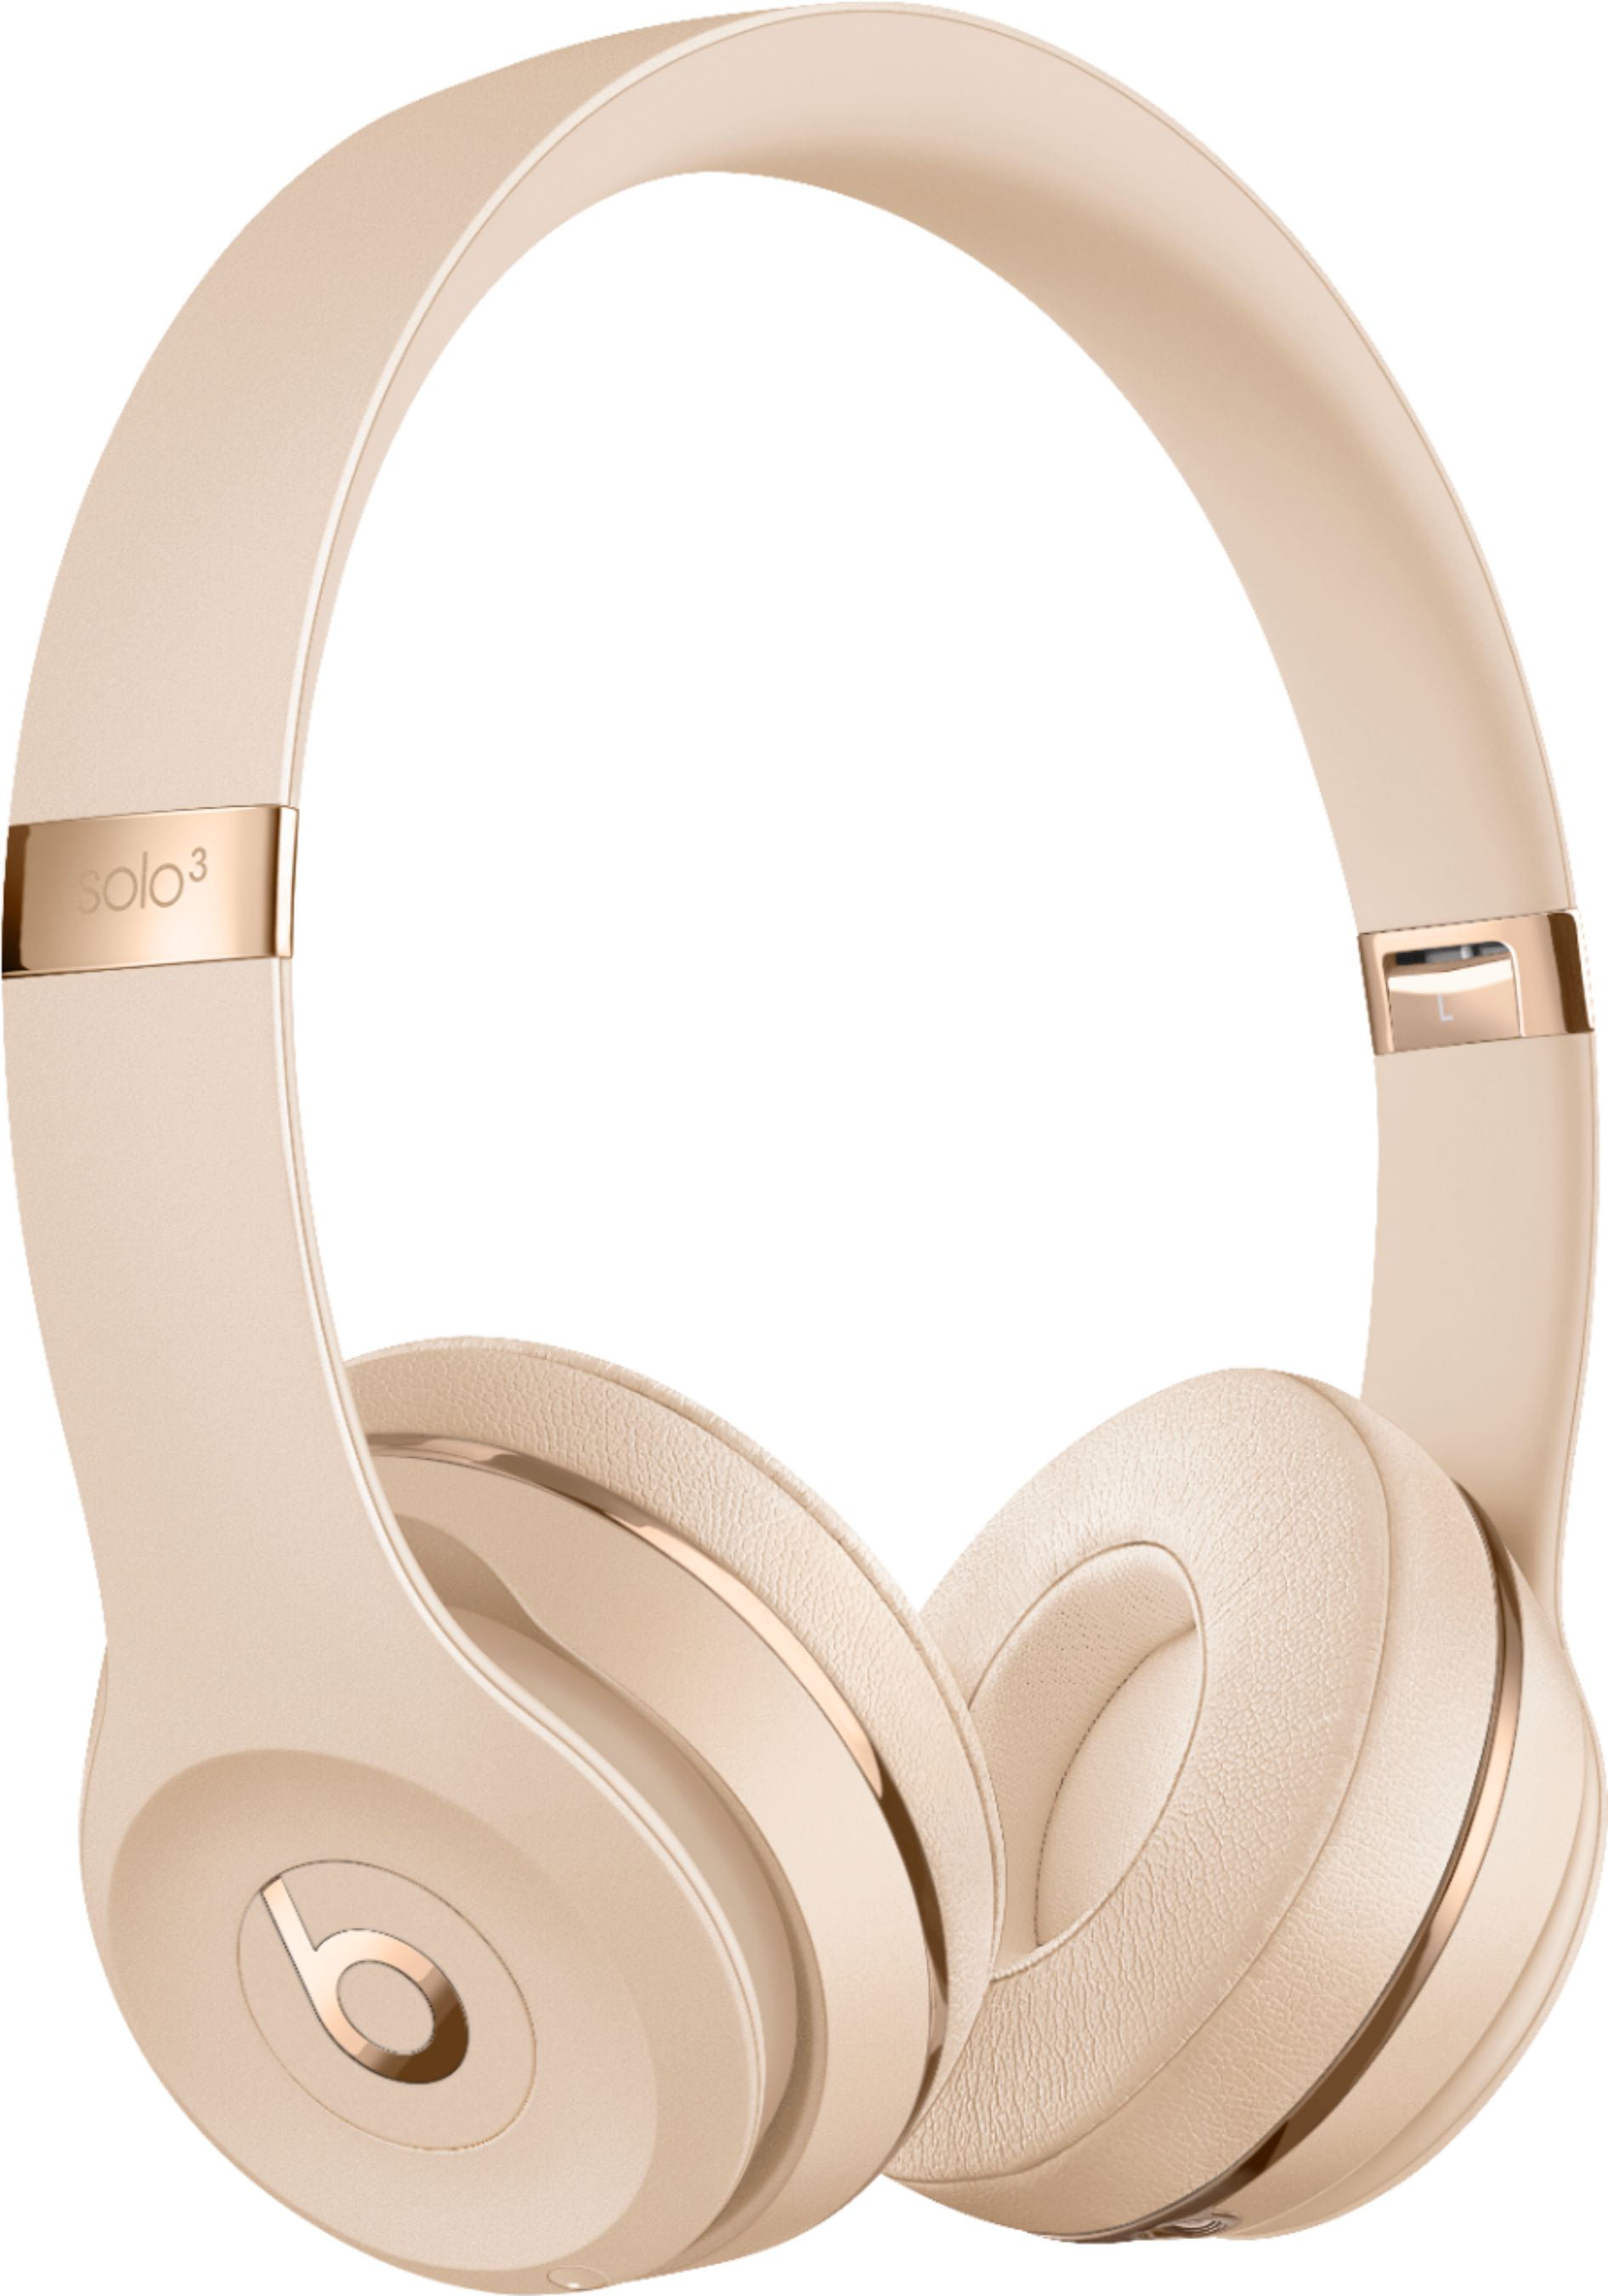 beats headphones rose gold price